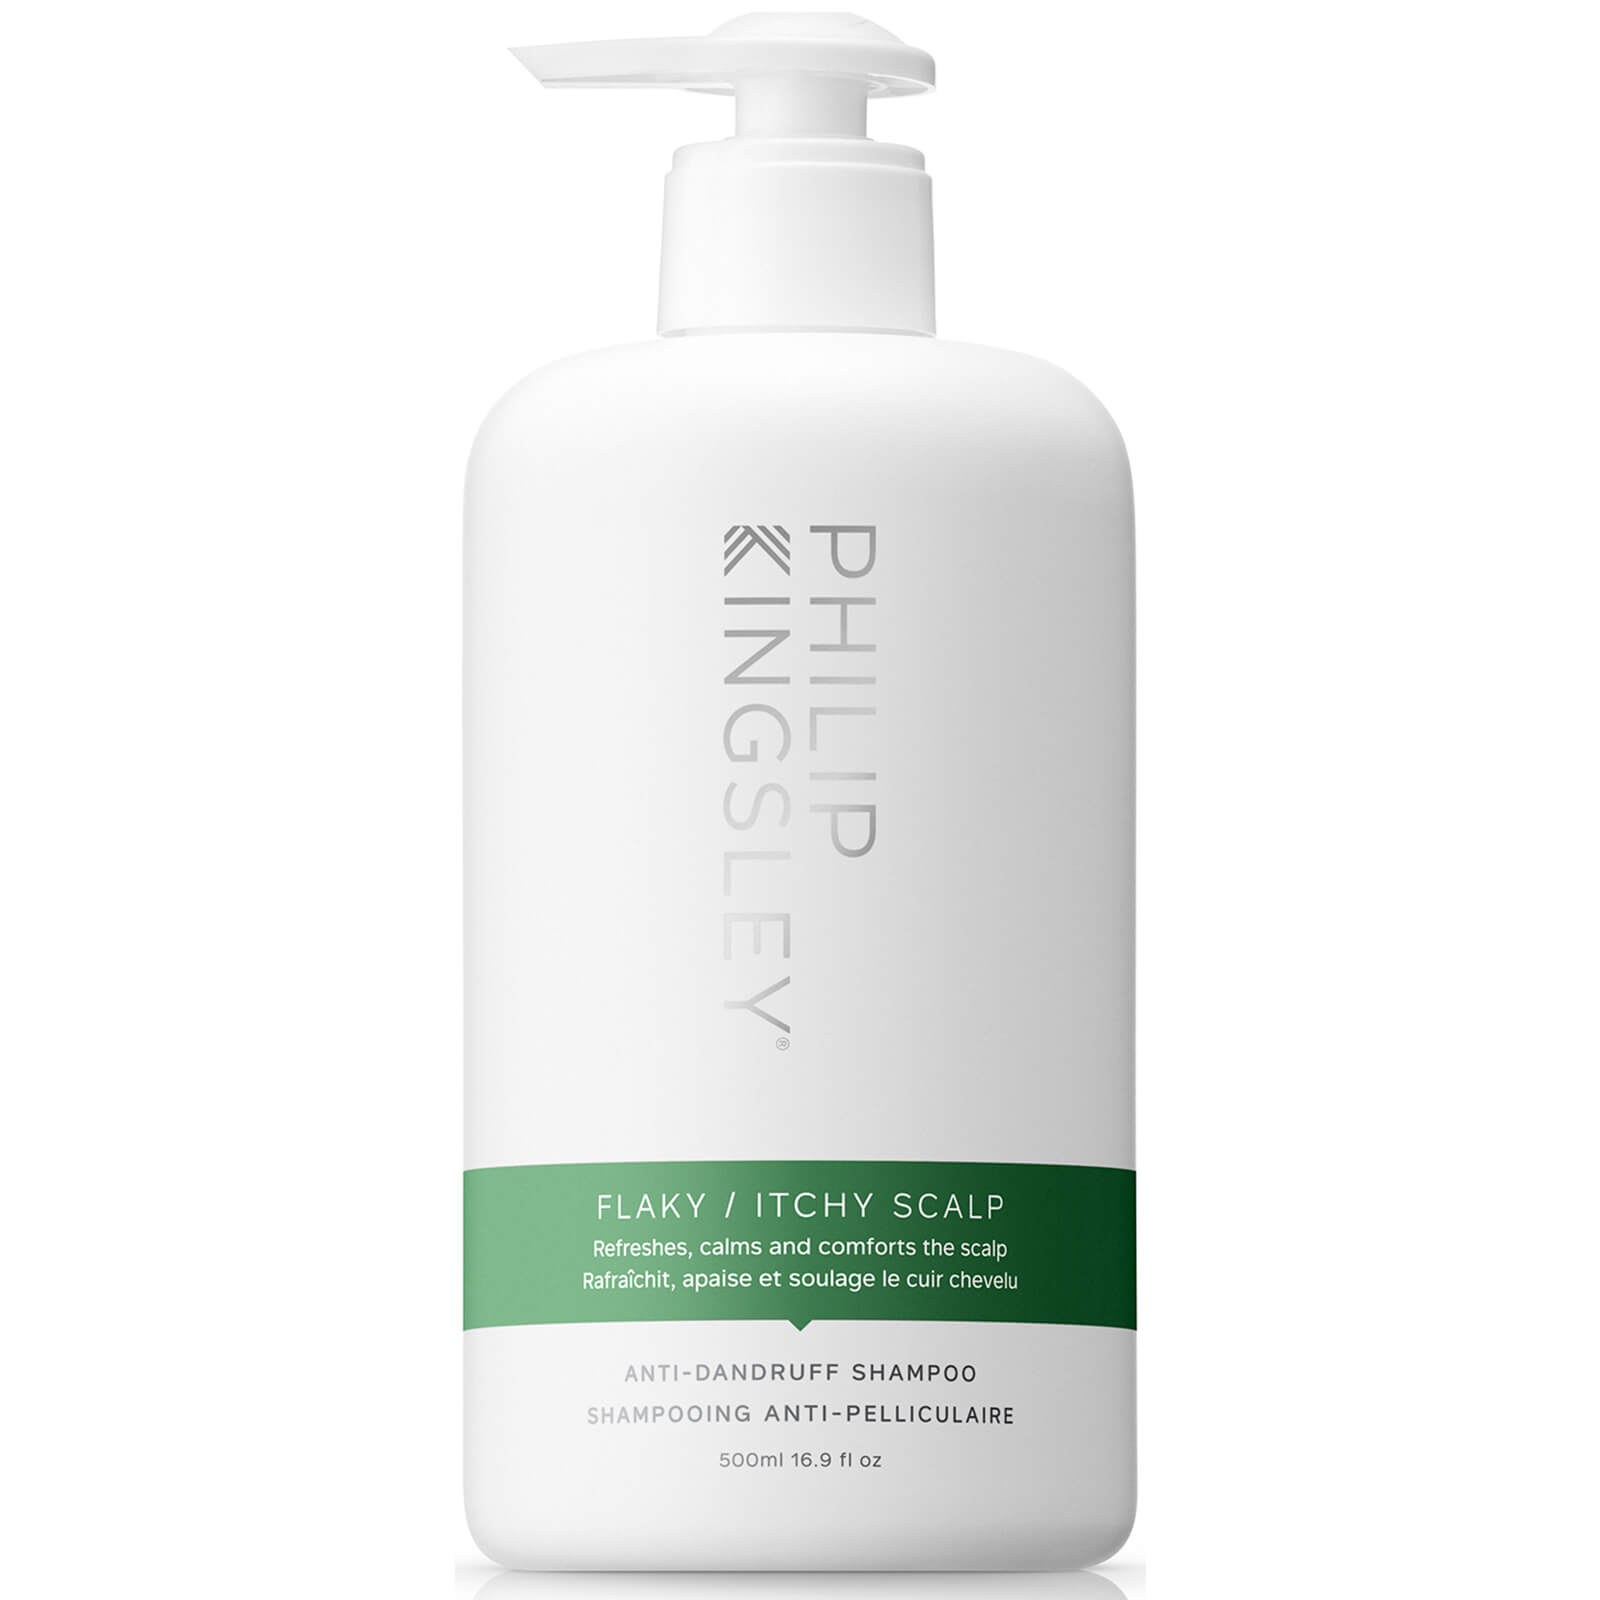 Photos - Hair Product Philip Kingsley Flaky/Itchy Scalp Anti-Dandruff Shampoo 500ml 